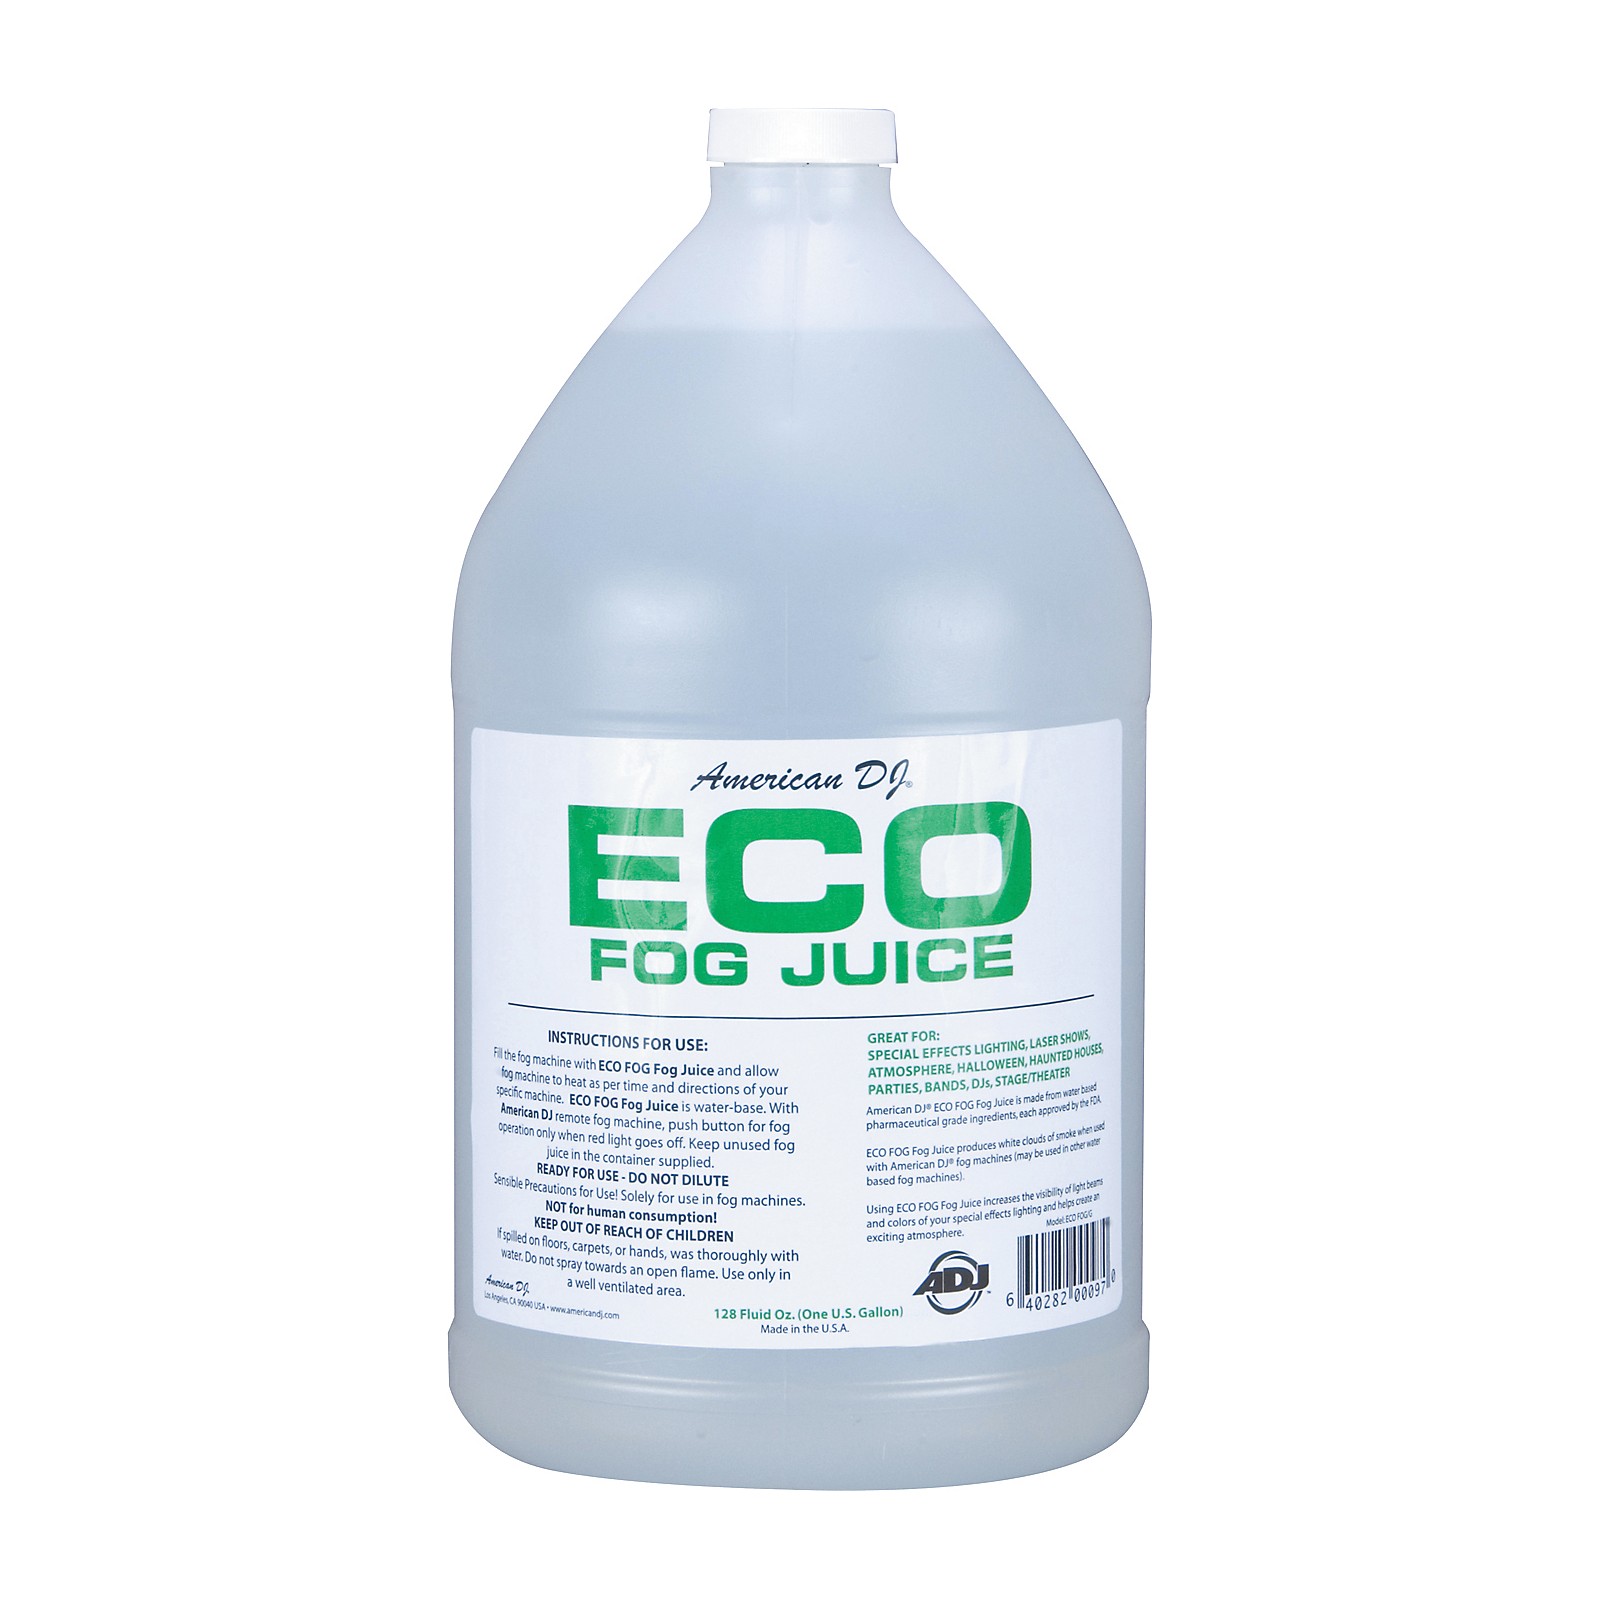 code 6 fog juice